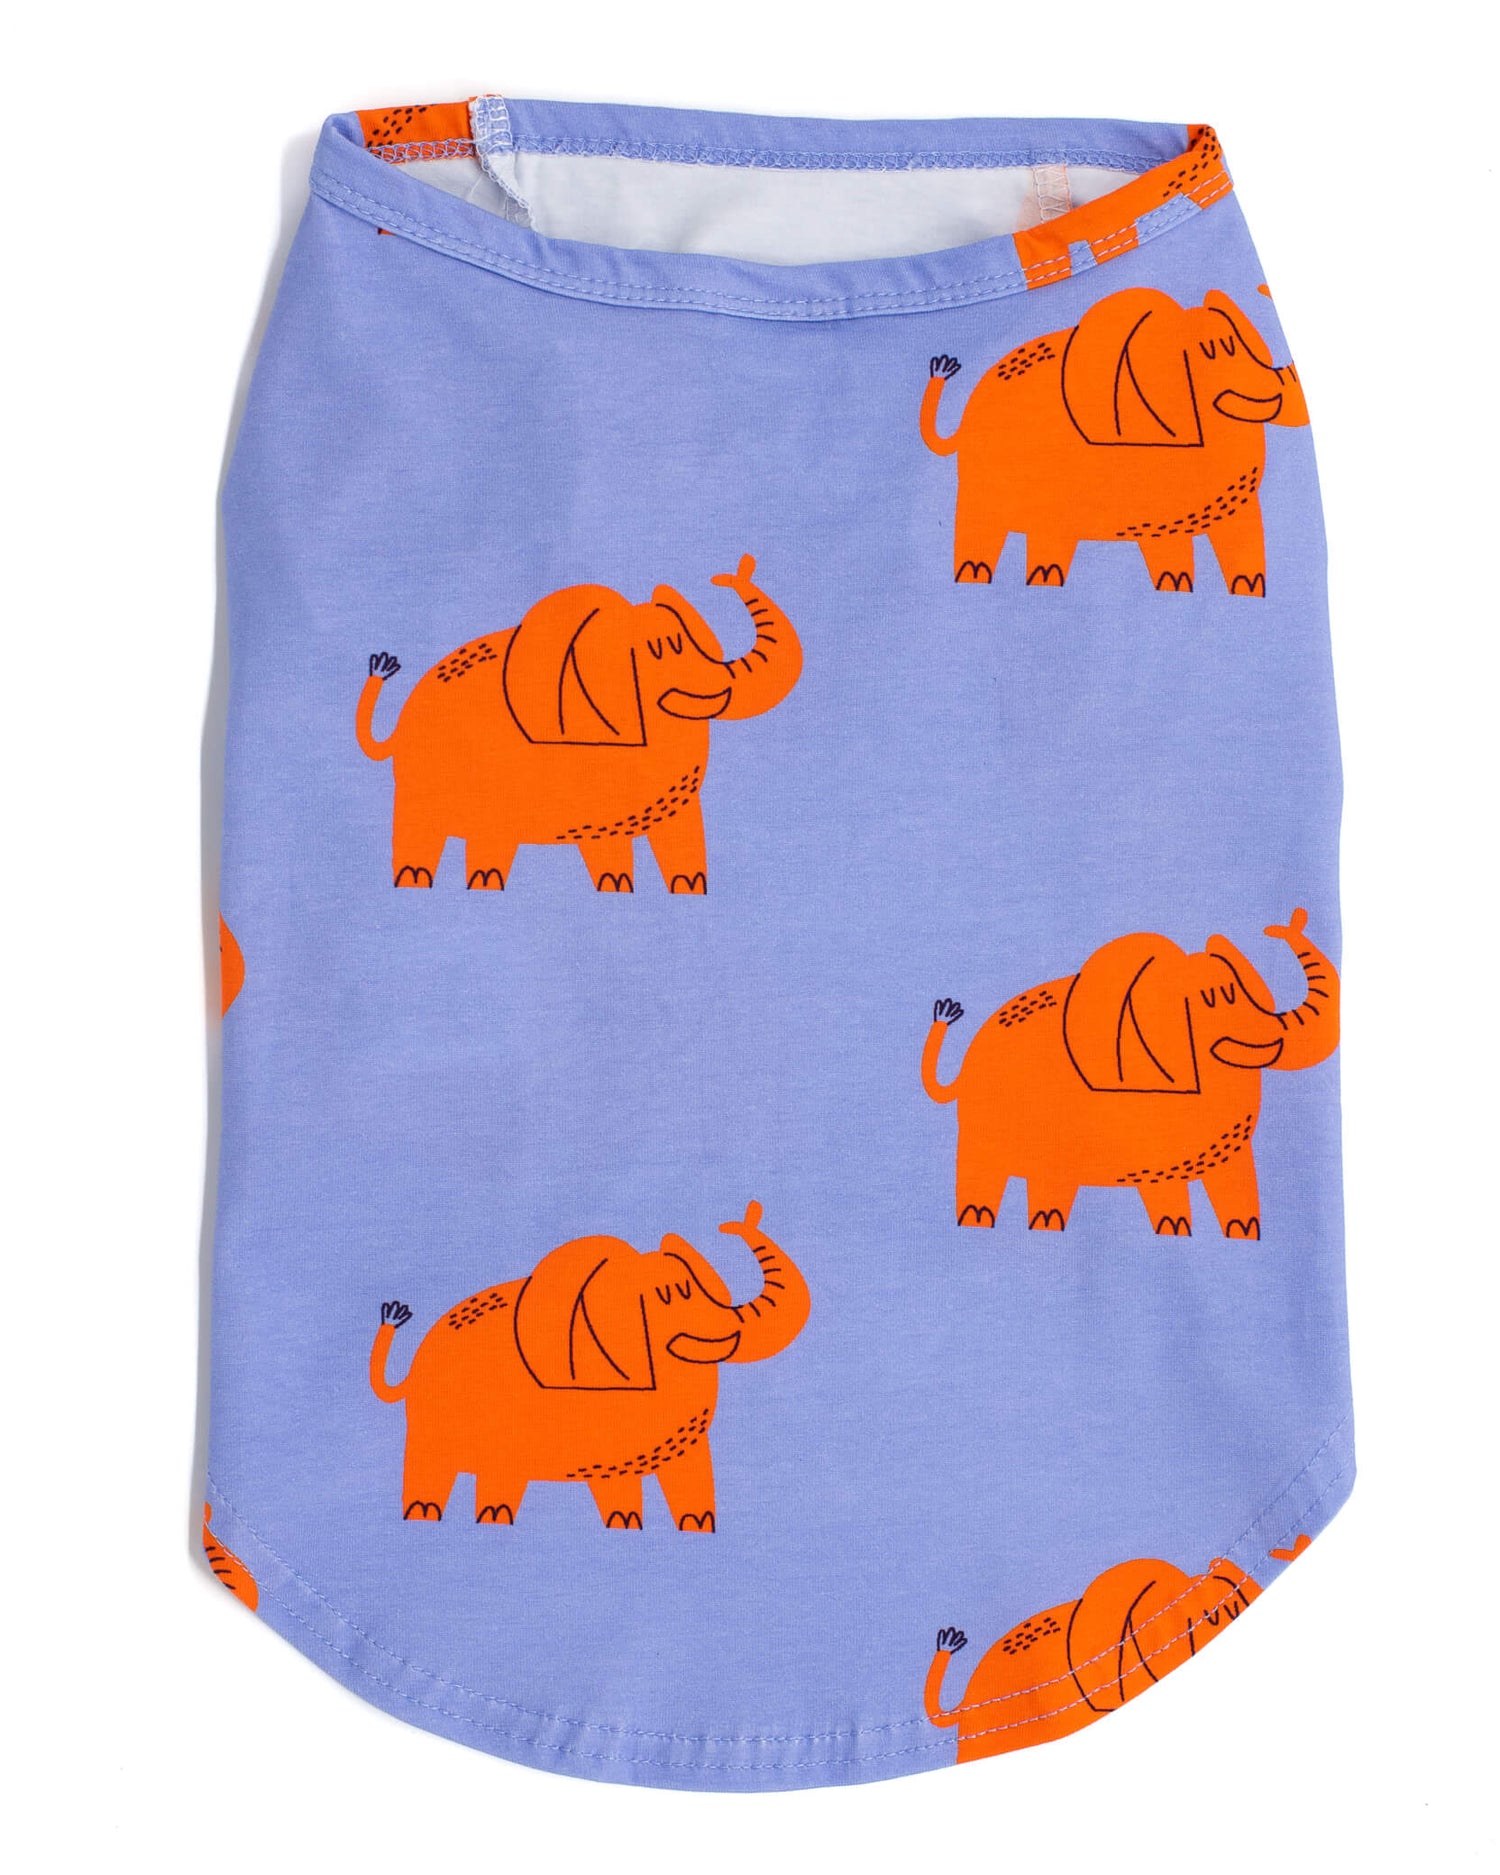 Back of Vibrant Hound Electric Elephant Dog shirt. It is a purple shirt with orange elephants printed on it. 